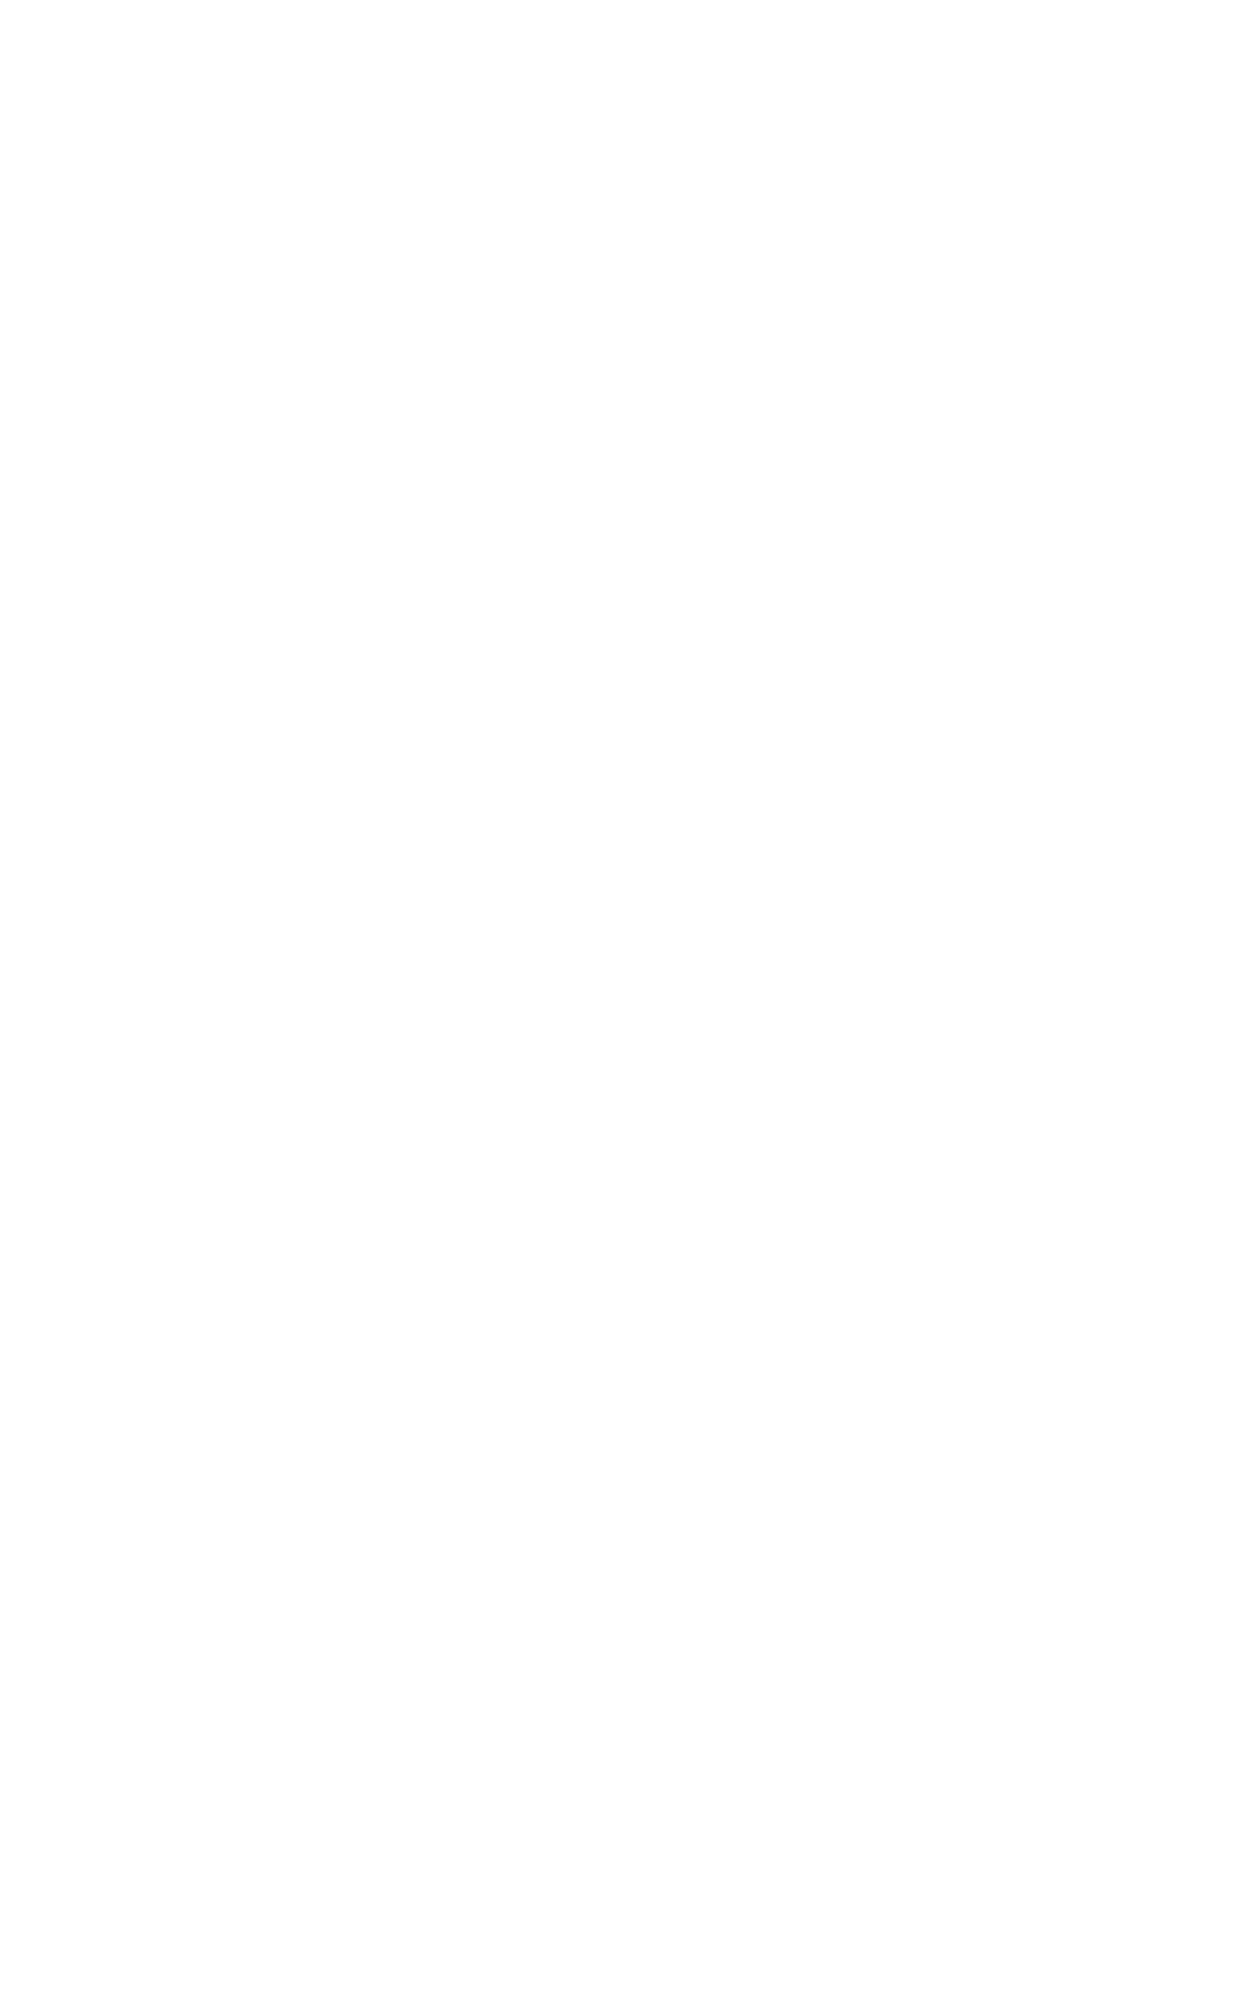 LOGO COMMUNE DE RIXENSART BLANC 01